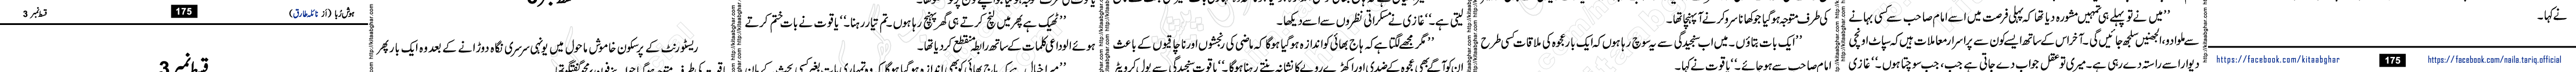 Hosh Ruba last episode 5 Urdu Novel by Naila Tariq